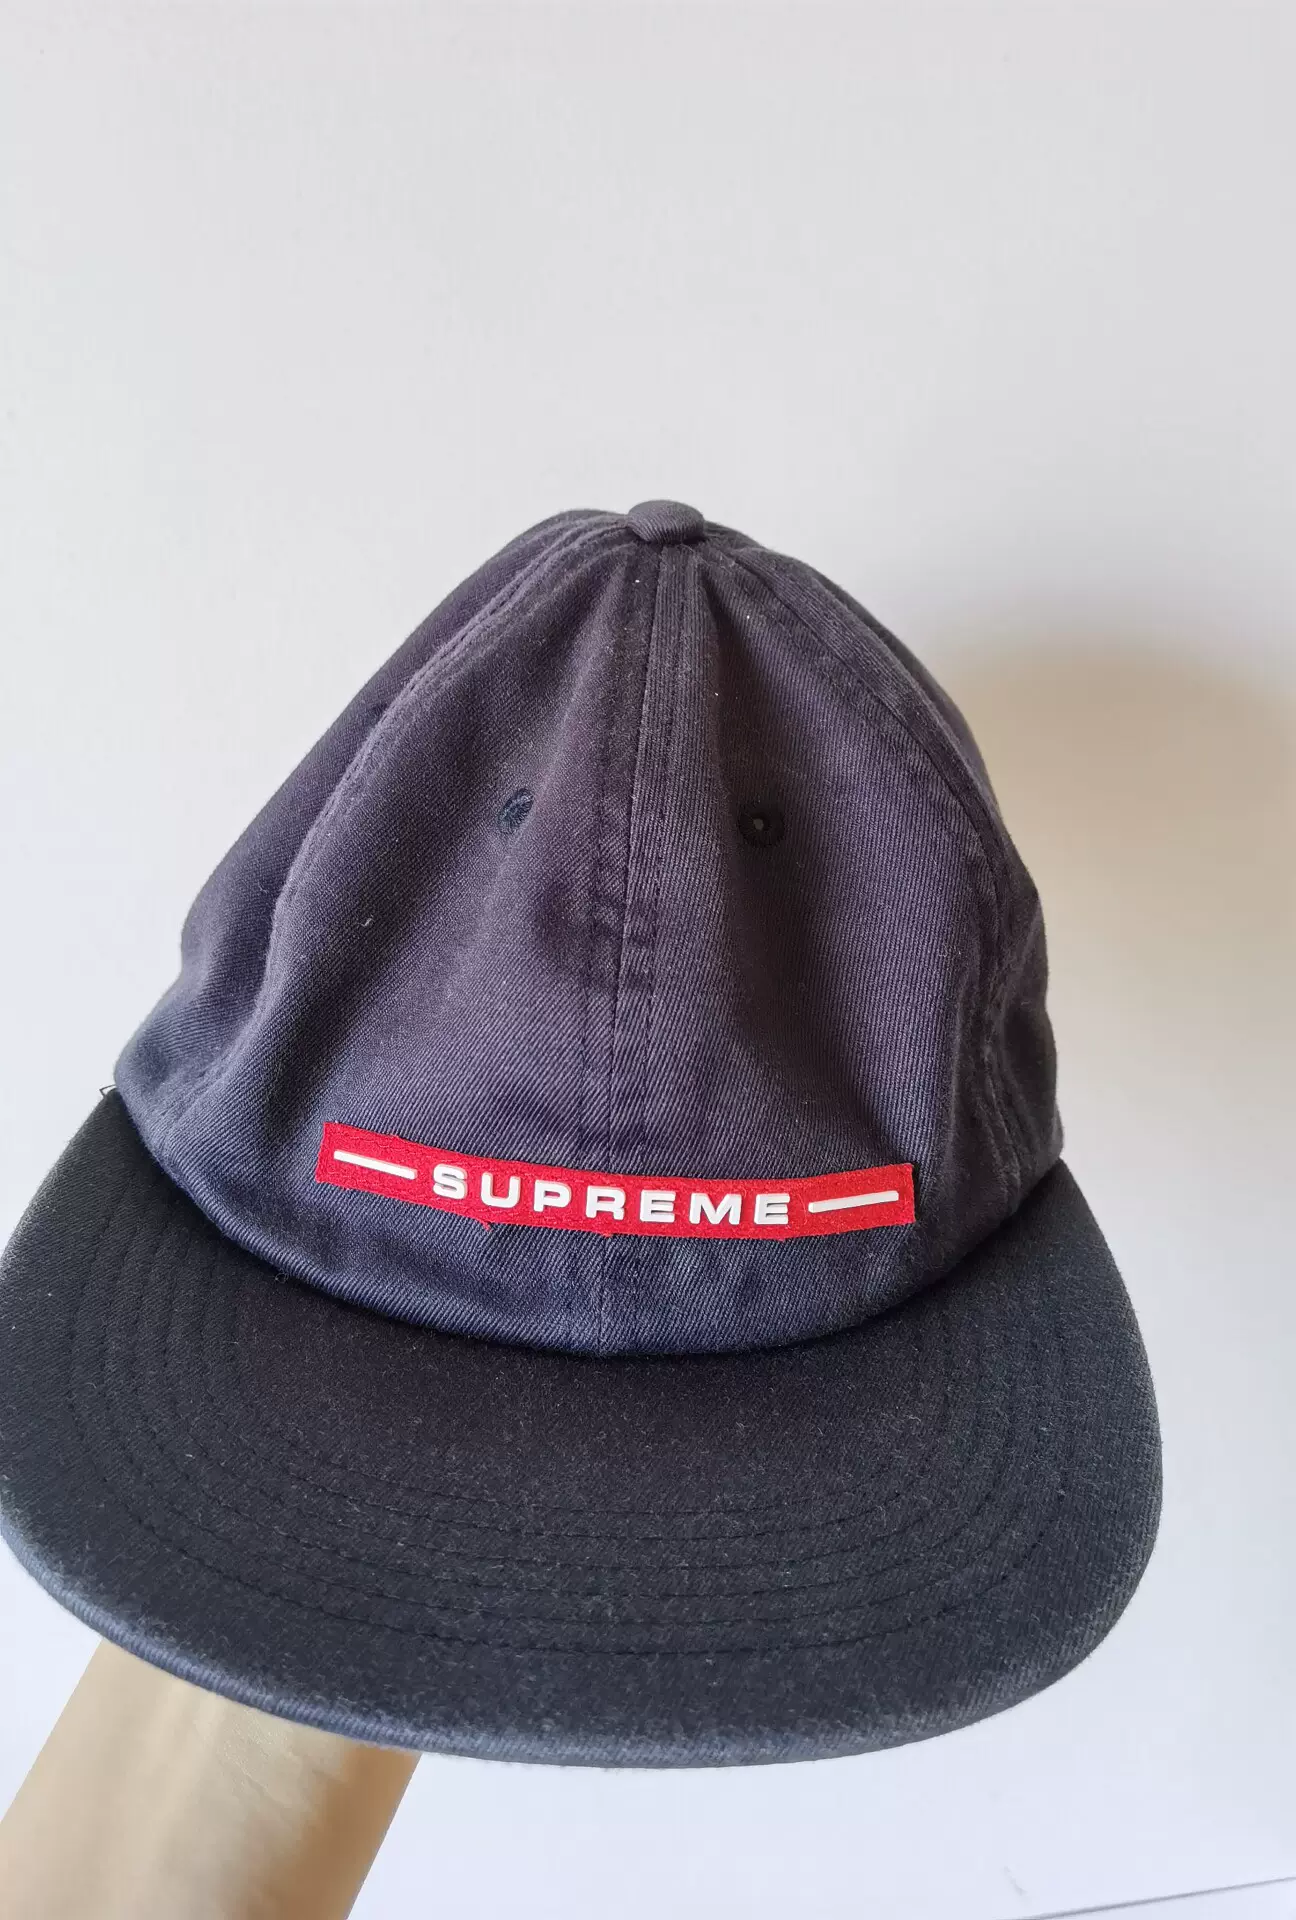 Supreme黑色经典帽子-Taobao Vietnam